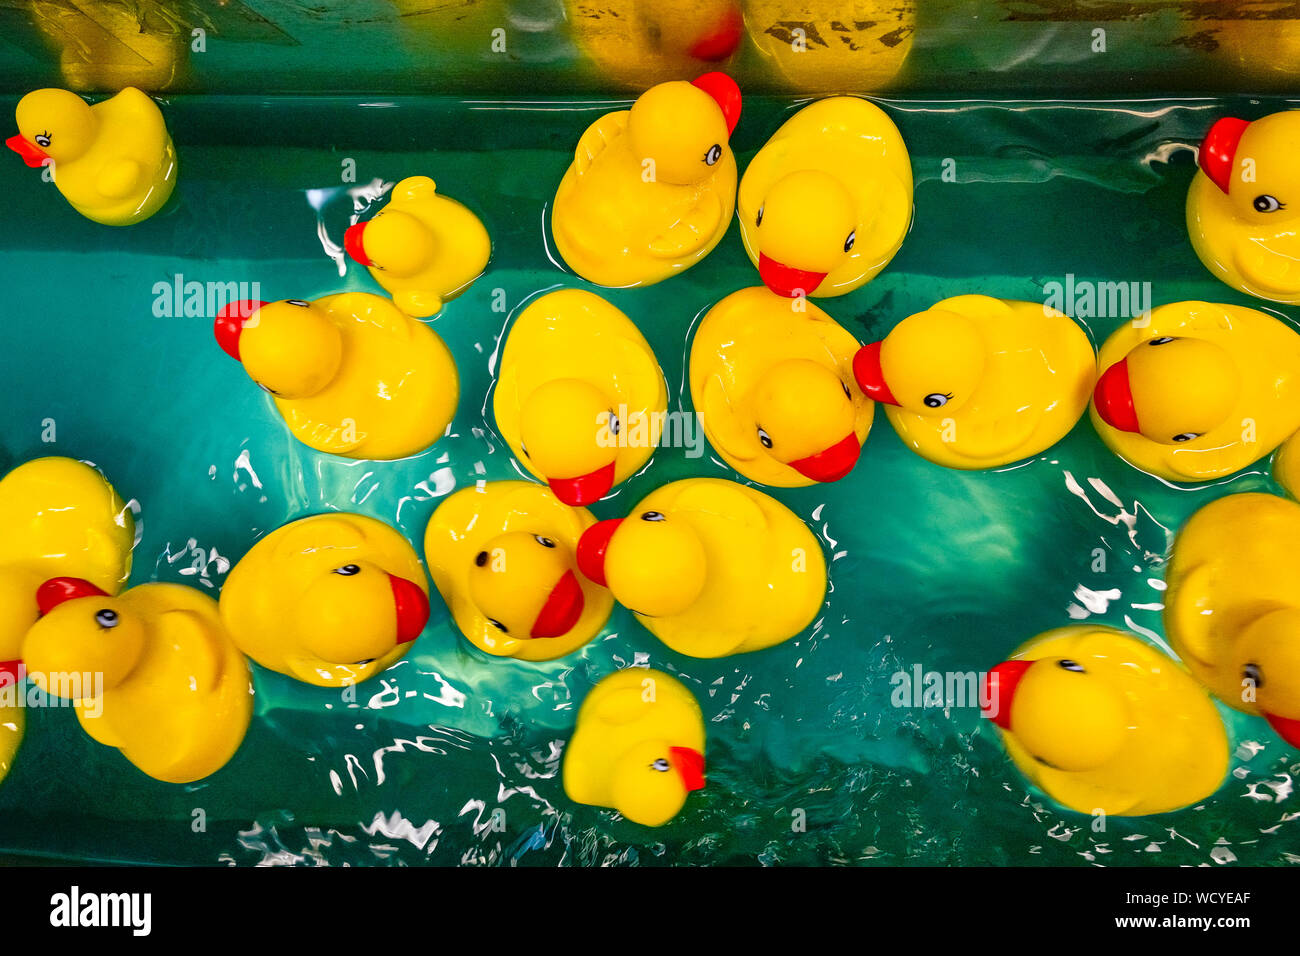 yellow rubber ducks Stock Photo